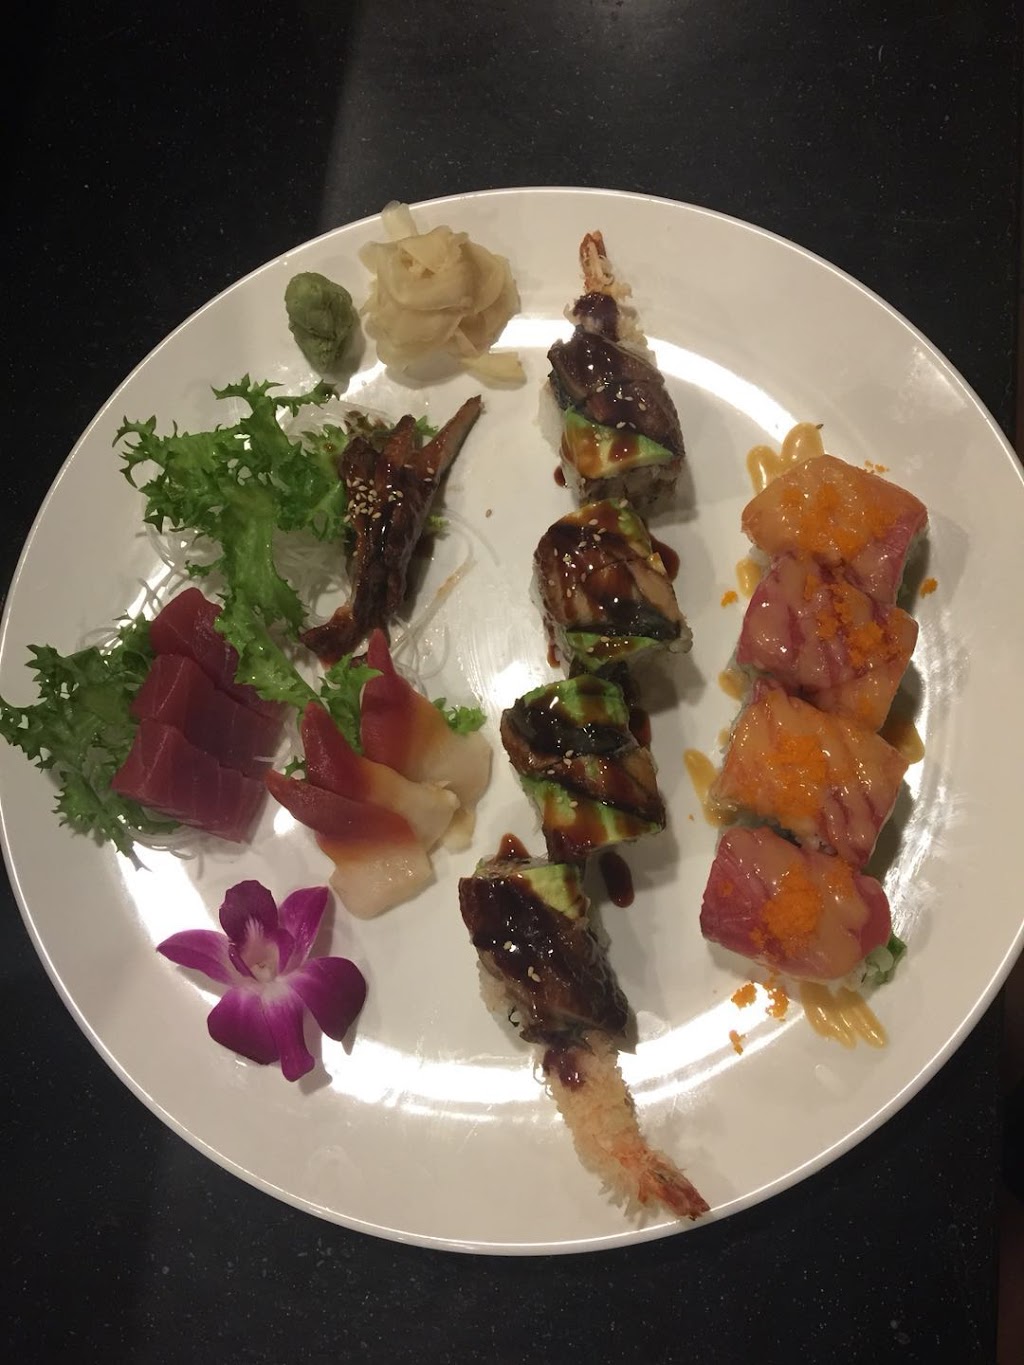 Lido Sushi Asian Bistro | 57 N Main St, Cranbury, NJ 08512 | Phone: (609) 395-7100